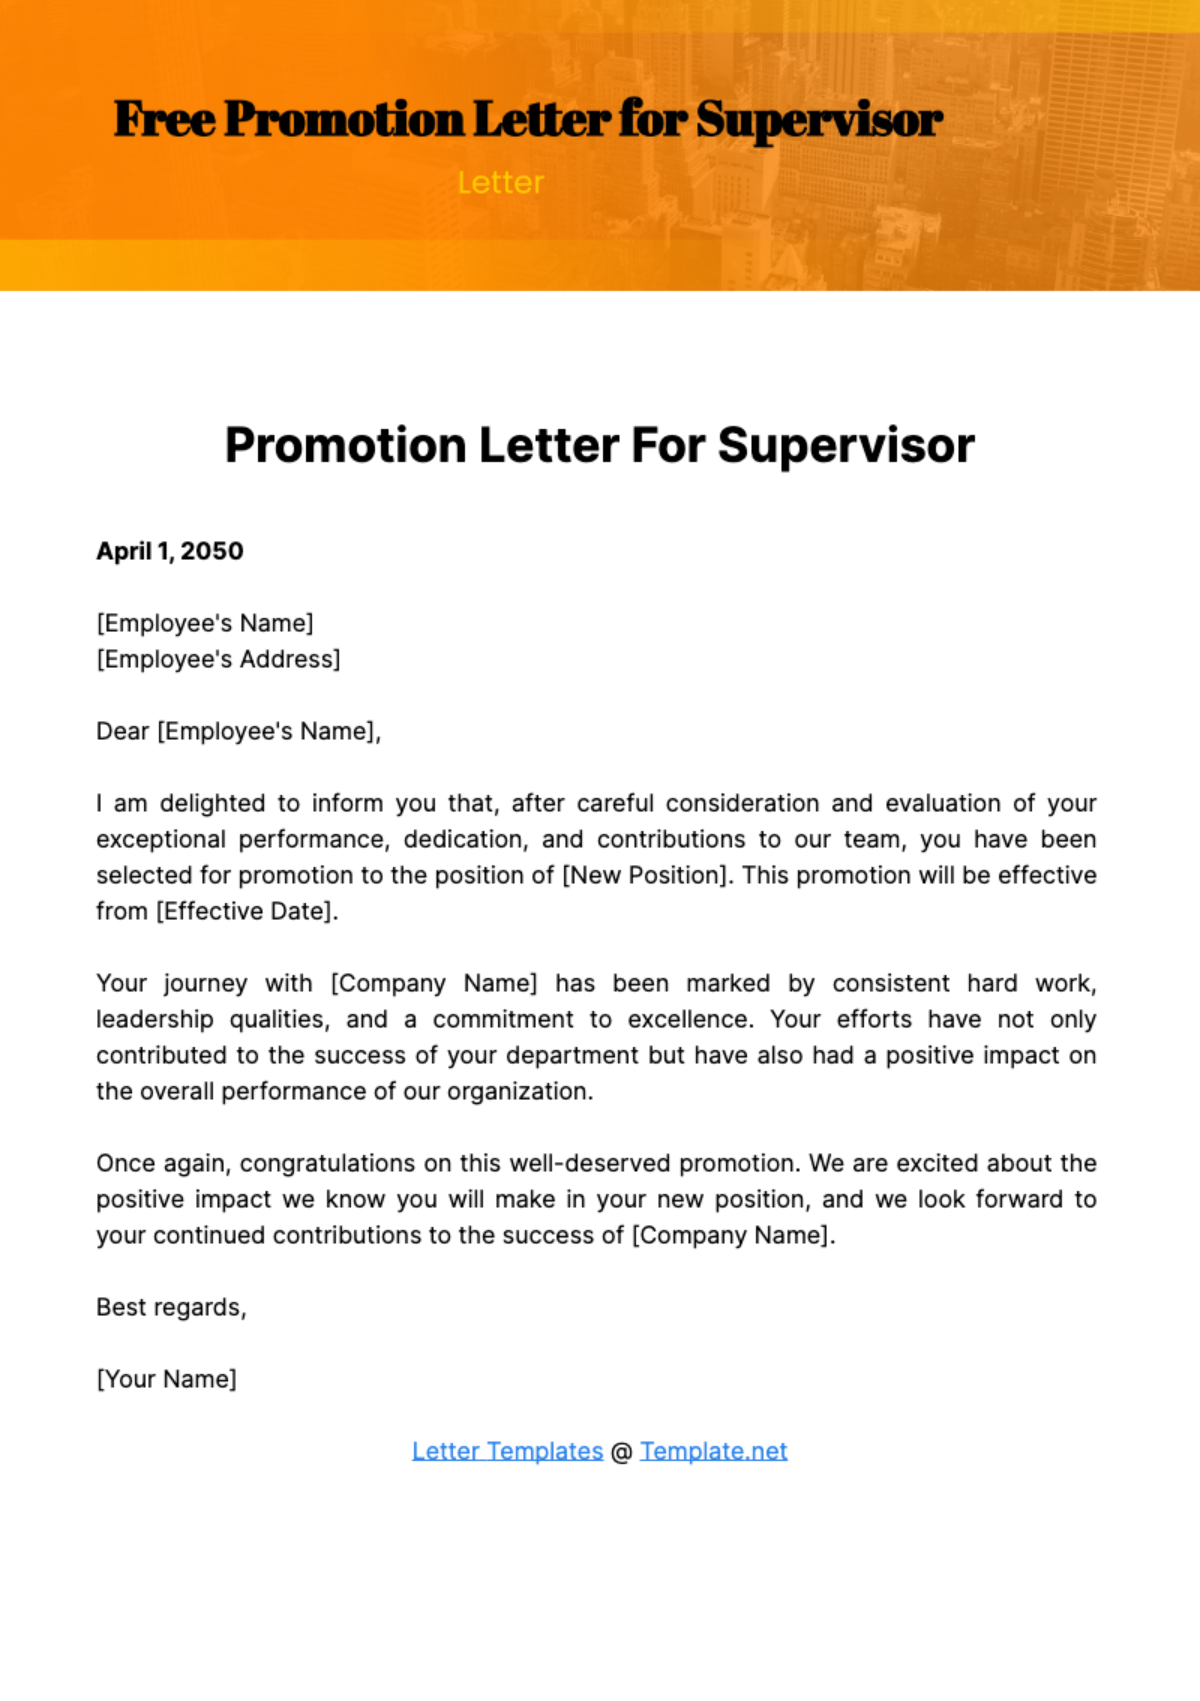 Free Promotion Letter for Supervisor Template